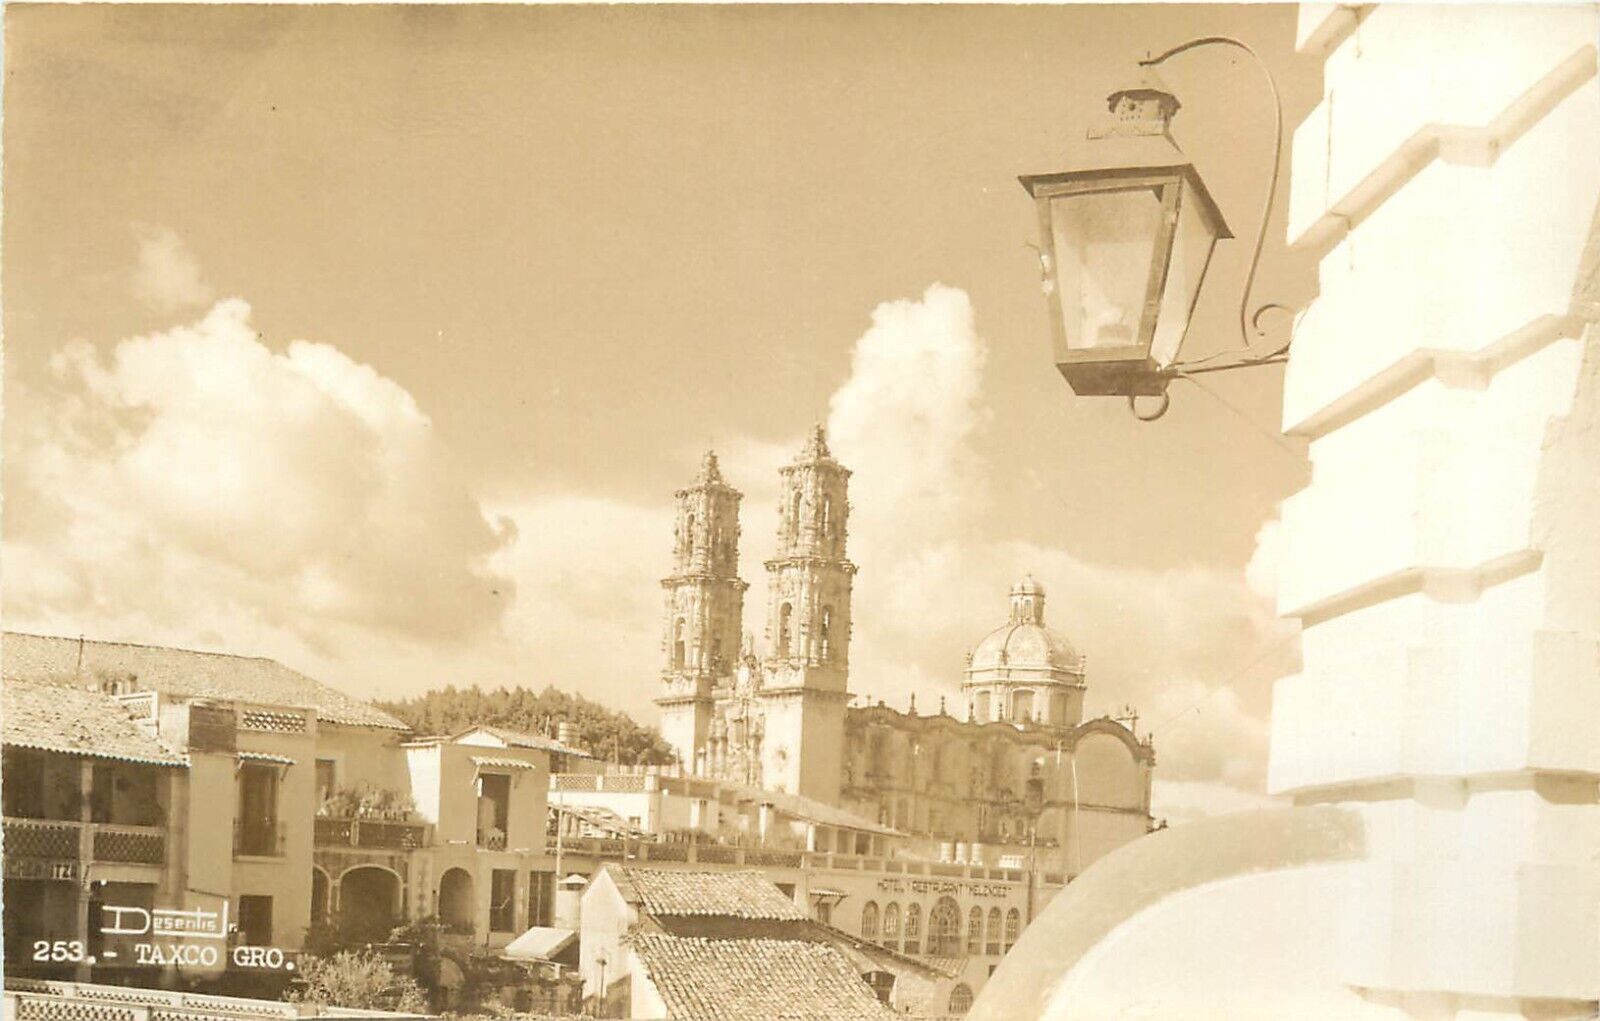 RPPC Postcard; Taxco Gro. Mexico, Rooftop View, Desentis Jr. 253